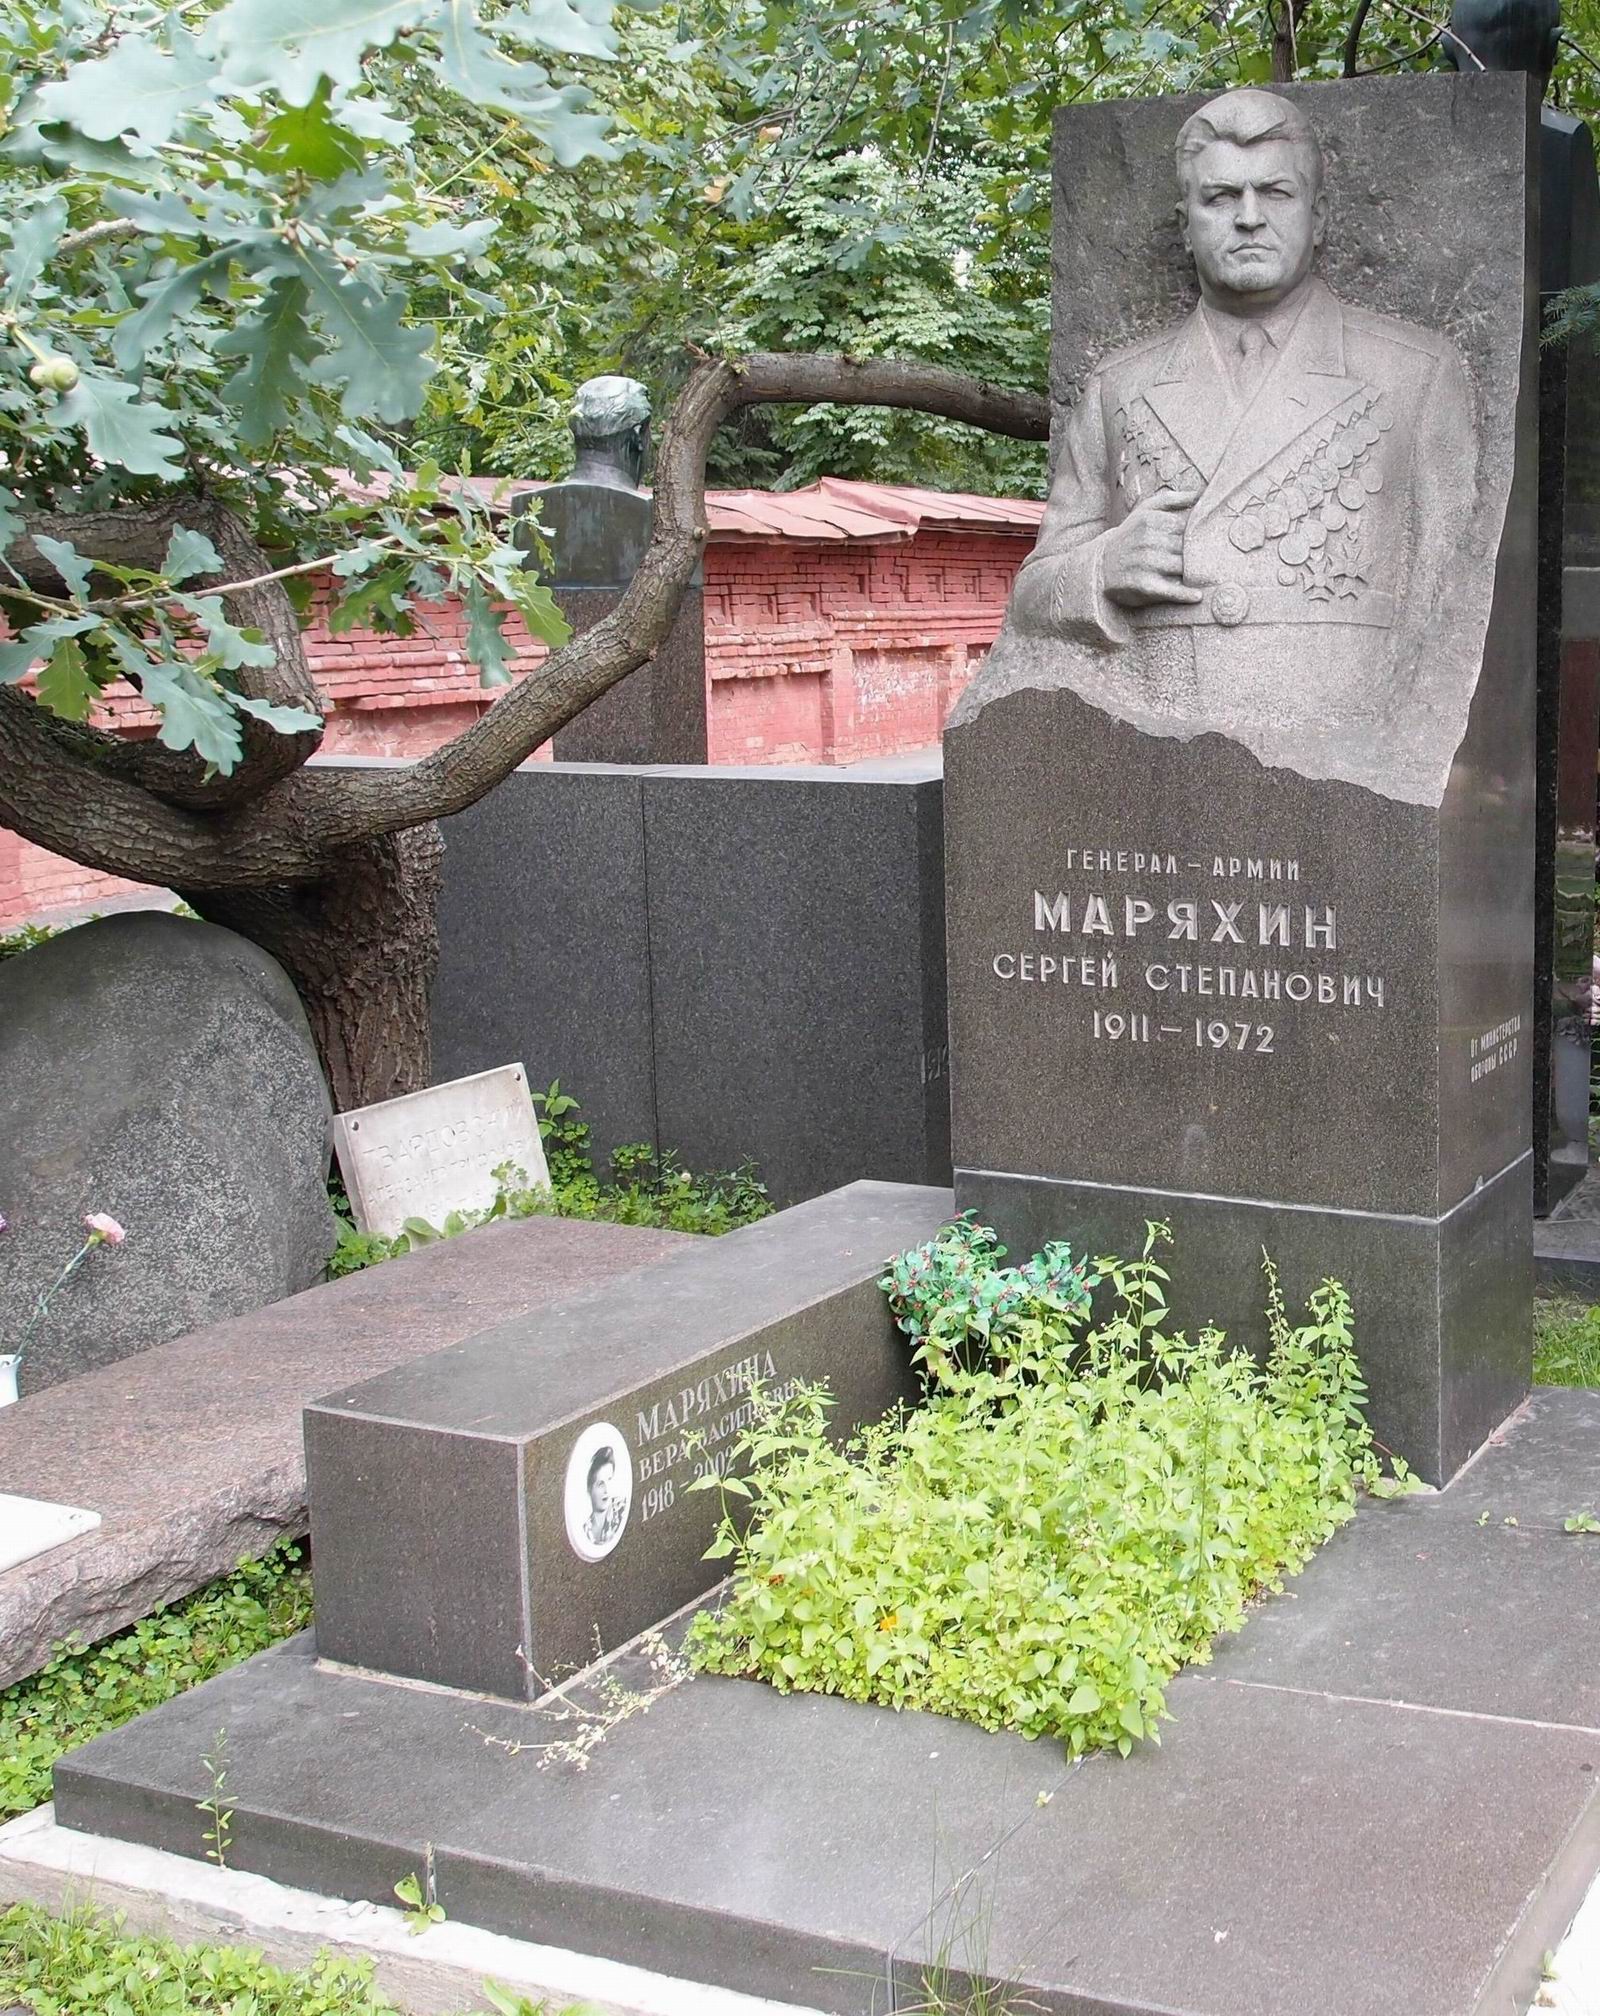 Памятник на могиле Маряхина С.С. (1911–1972), ск. А.Елецкий, на Новодевичьем кладбище (7–20–2).